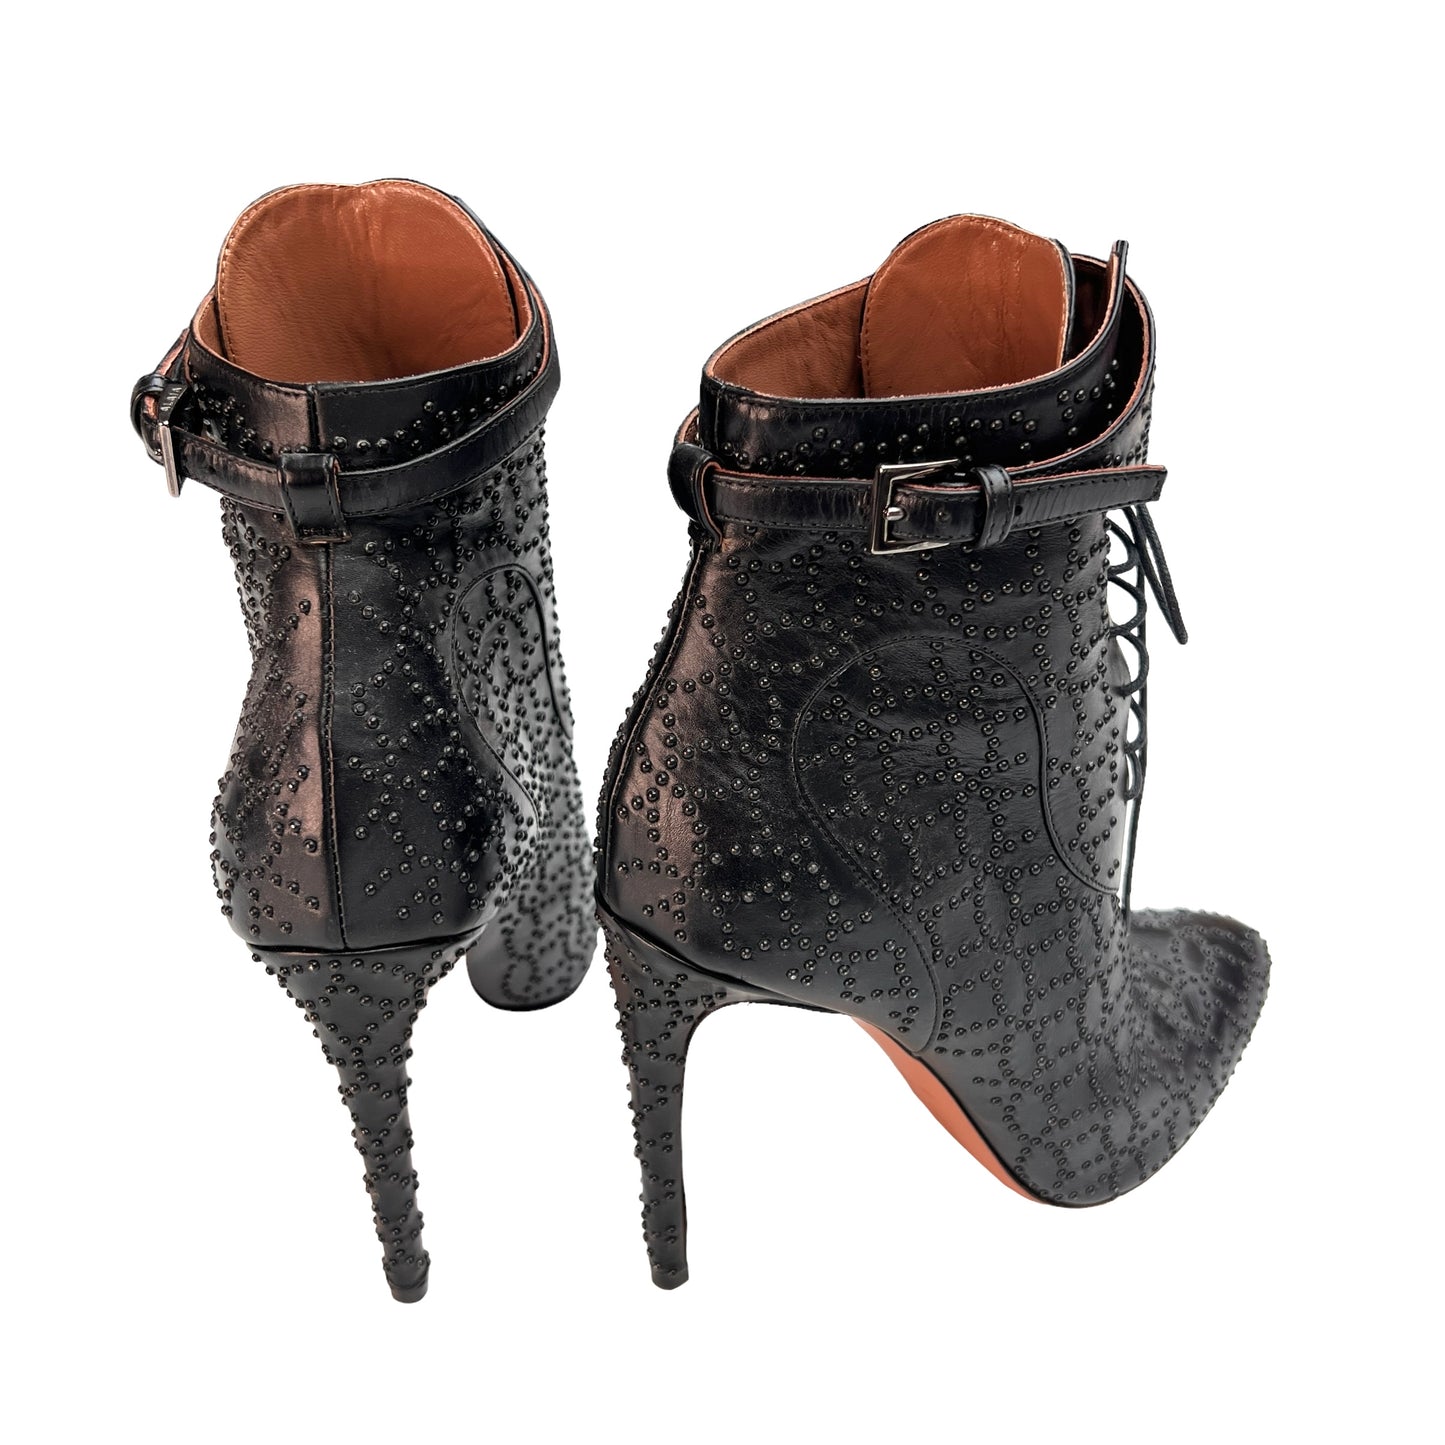 Black Studded Heeled Boots - 9.5